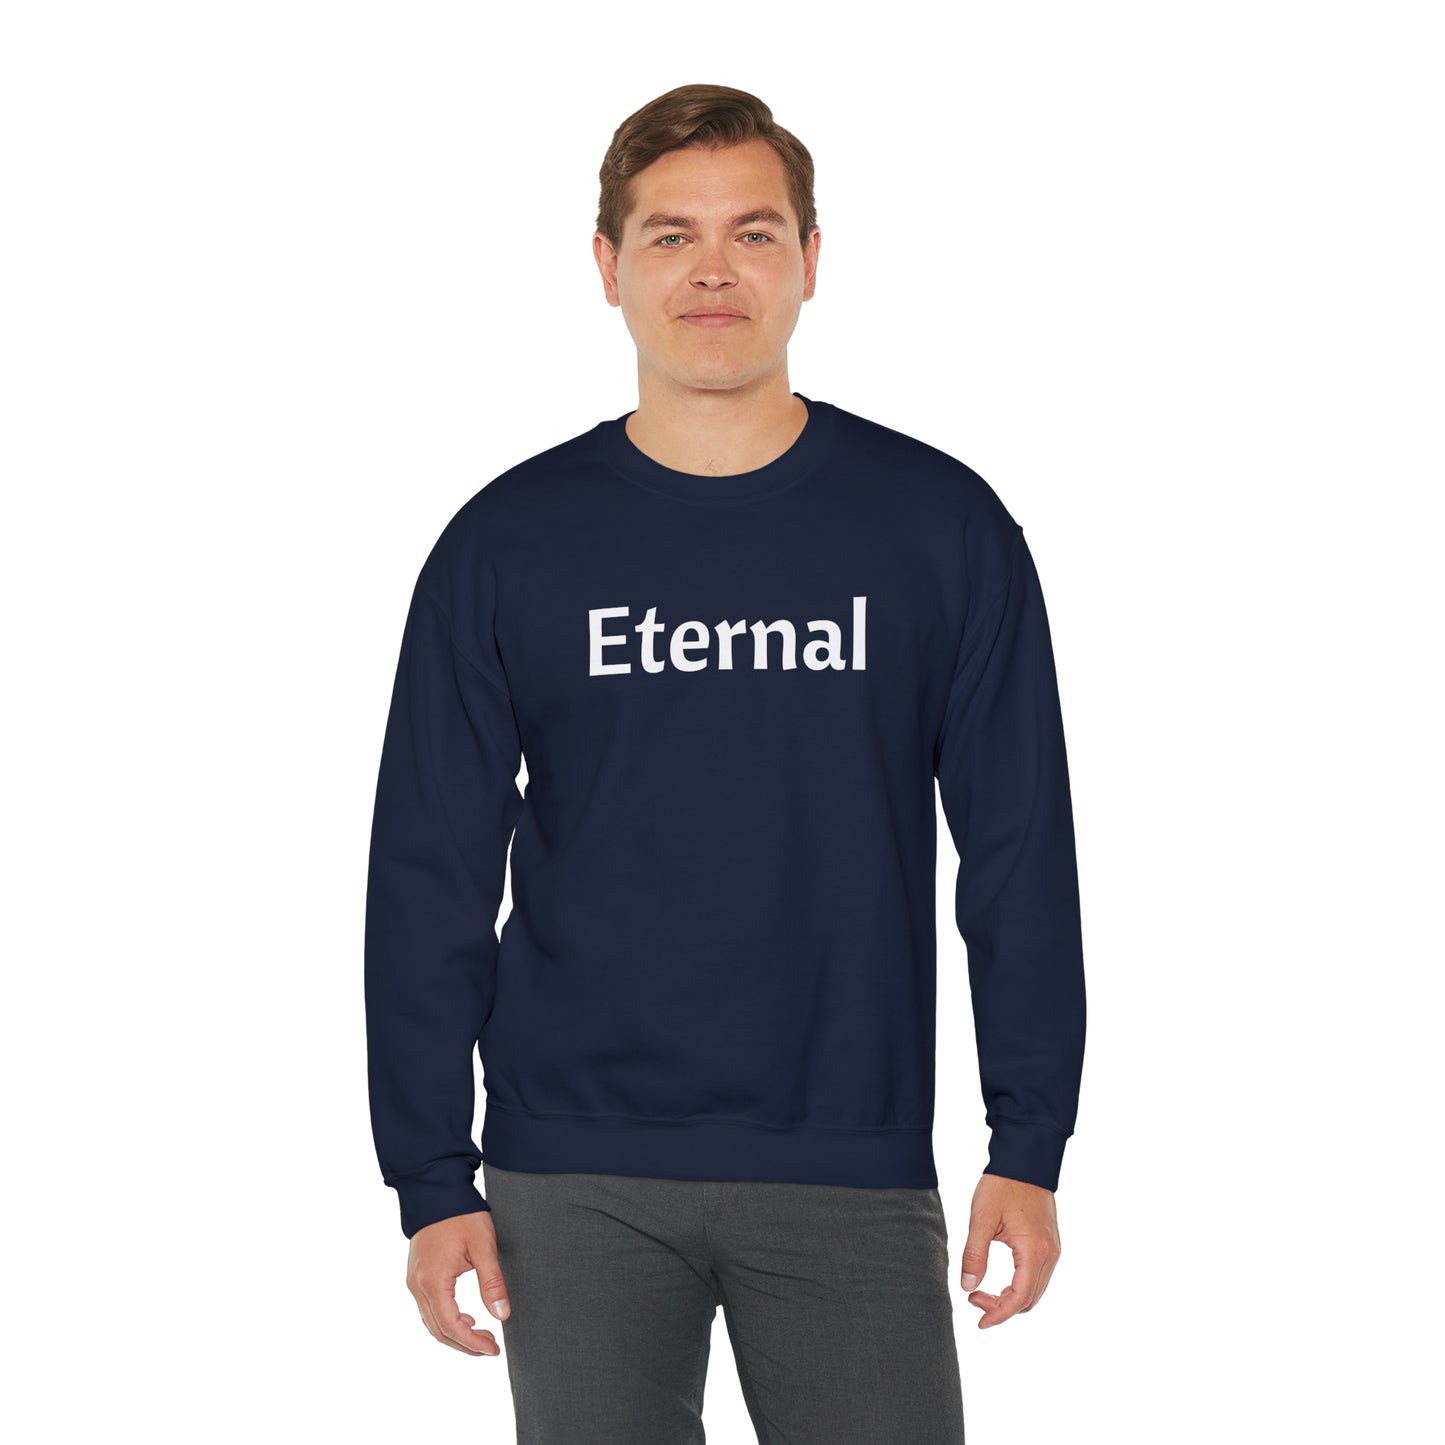 Eternal Sweatshirt